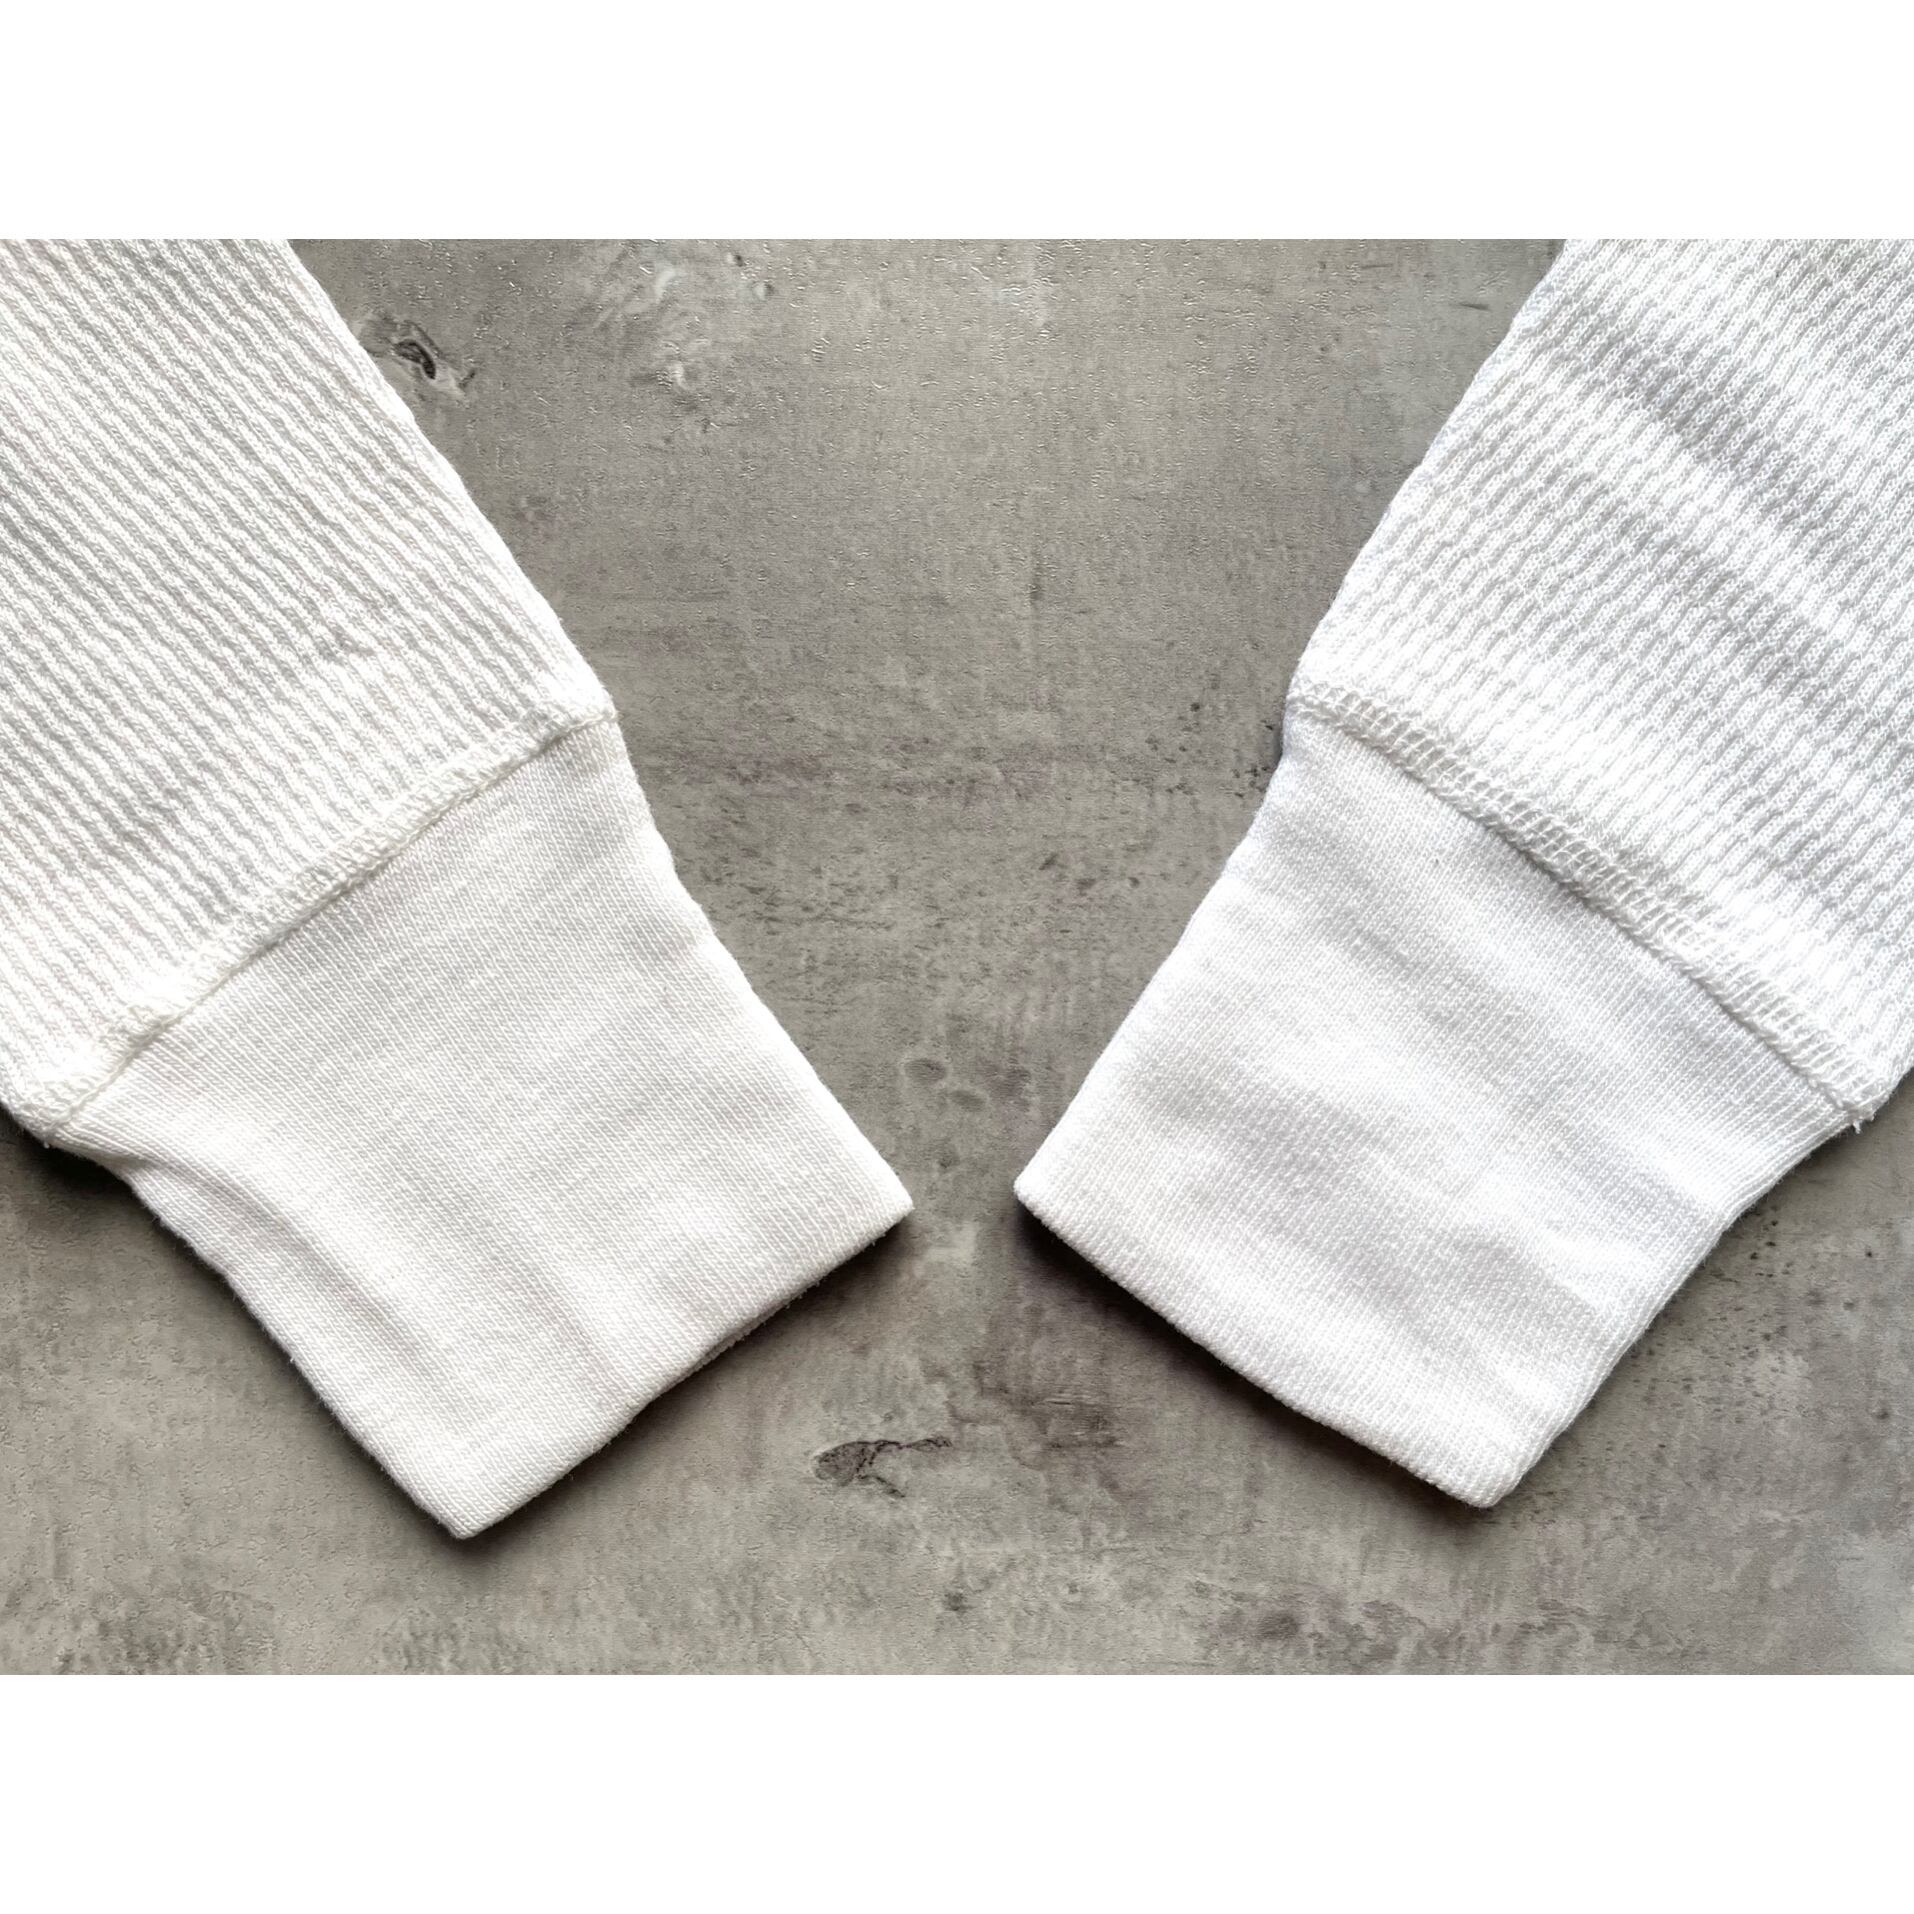 80s healthknit l/s thermal tee white “Made in USA” ヘルスニット サーマル ロングTシャツ ホワイト